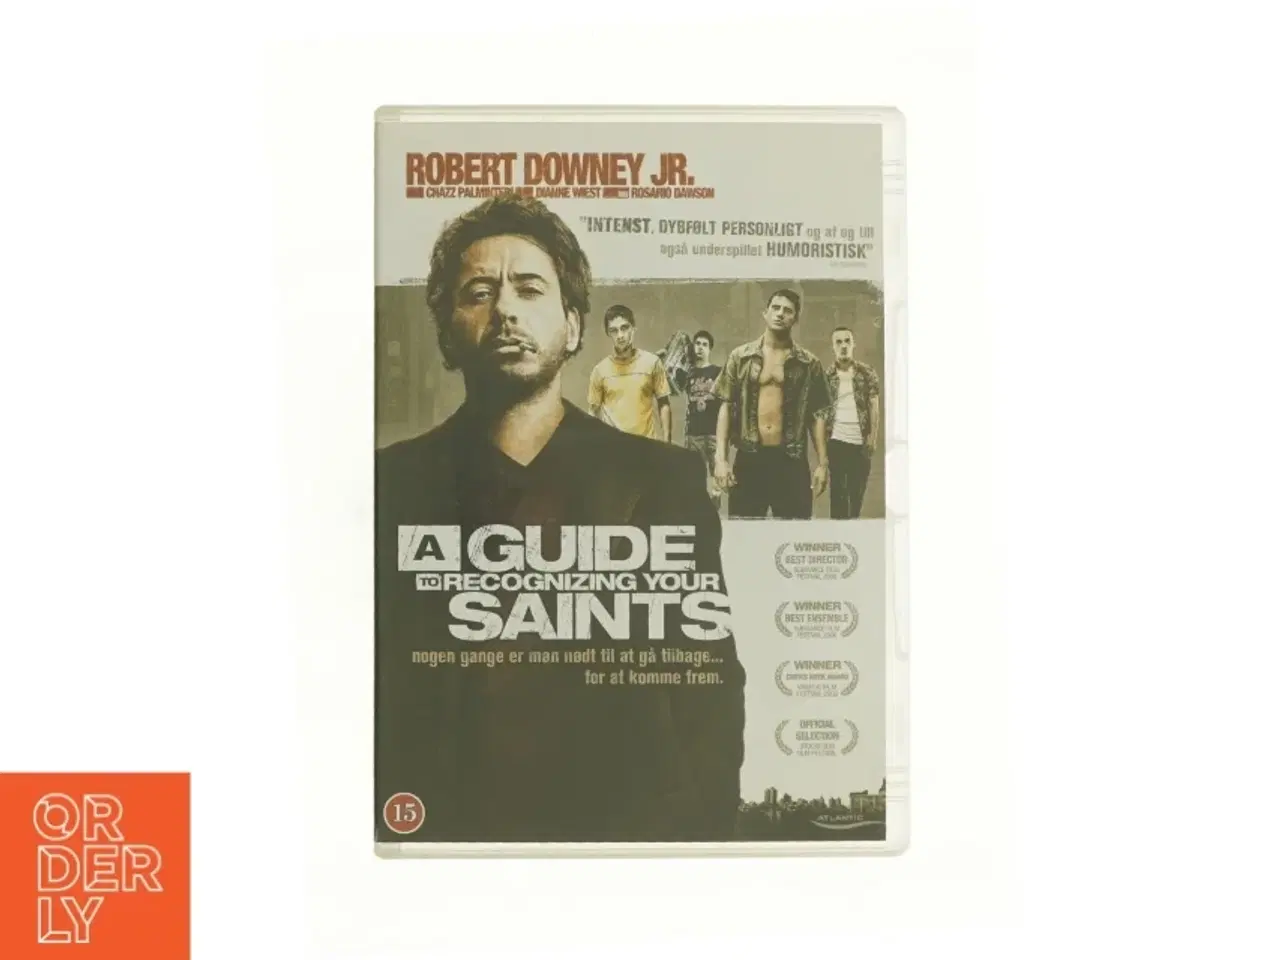 Billede 1 - A guide to recognizing your saints fra dvd